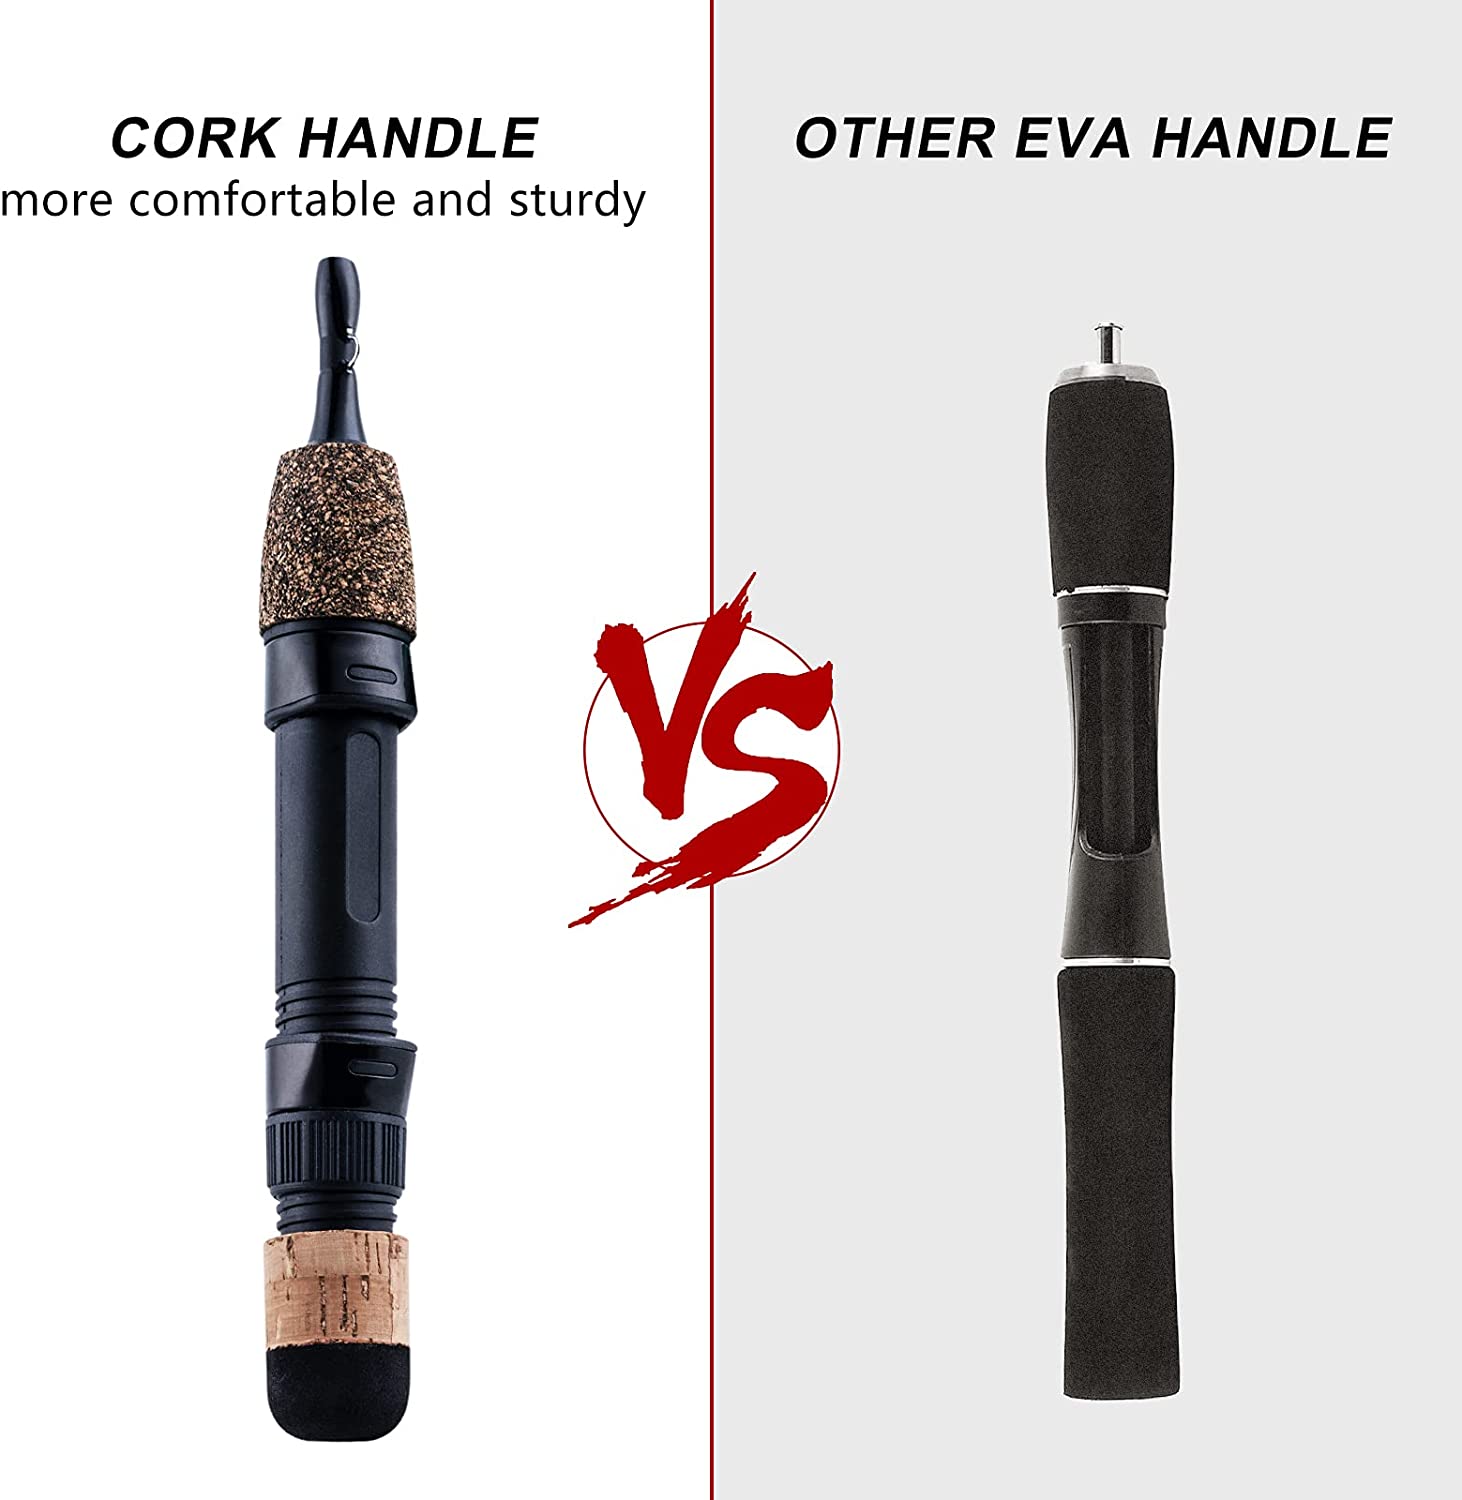 Carbon Fishing Rod, Portable High Strength Wear Resistance Cork